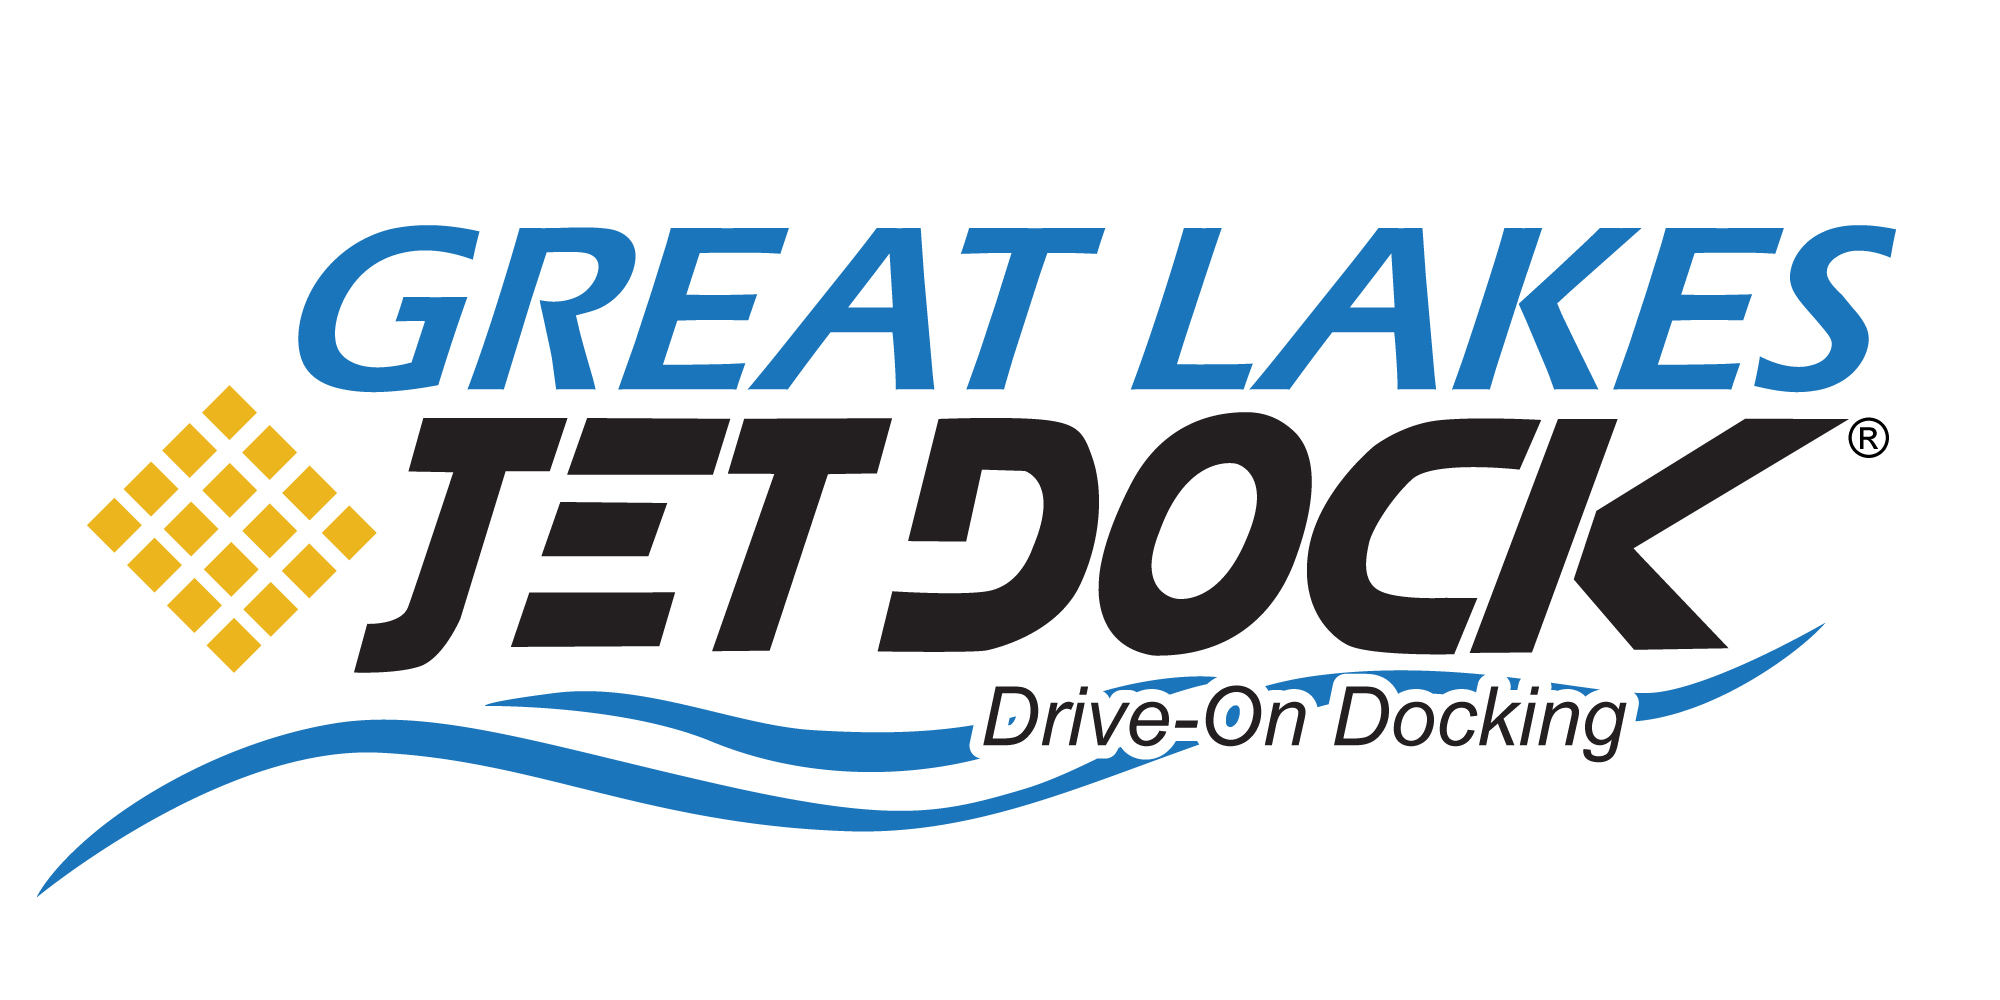 Great Lakes Jet Dock